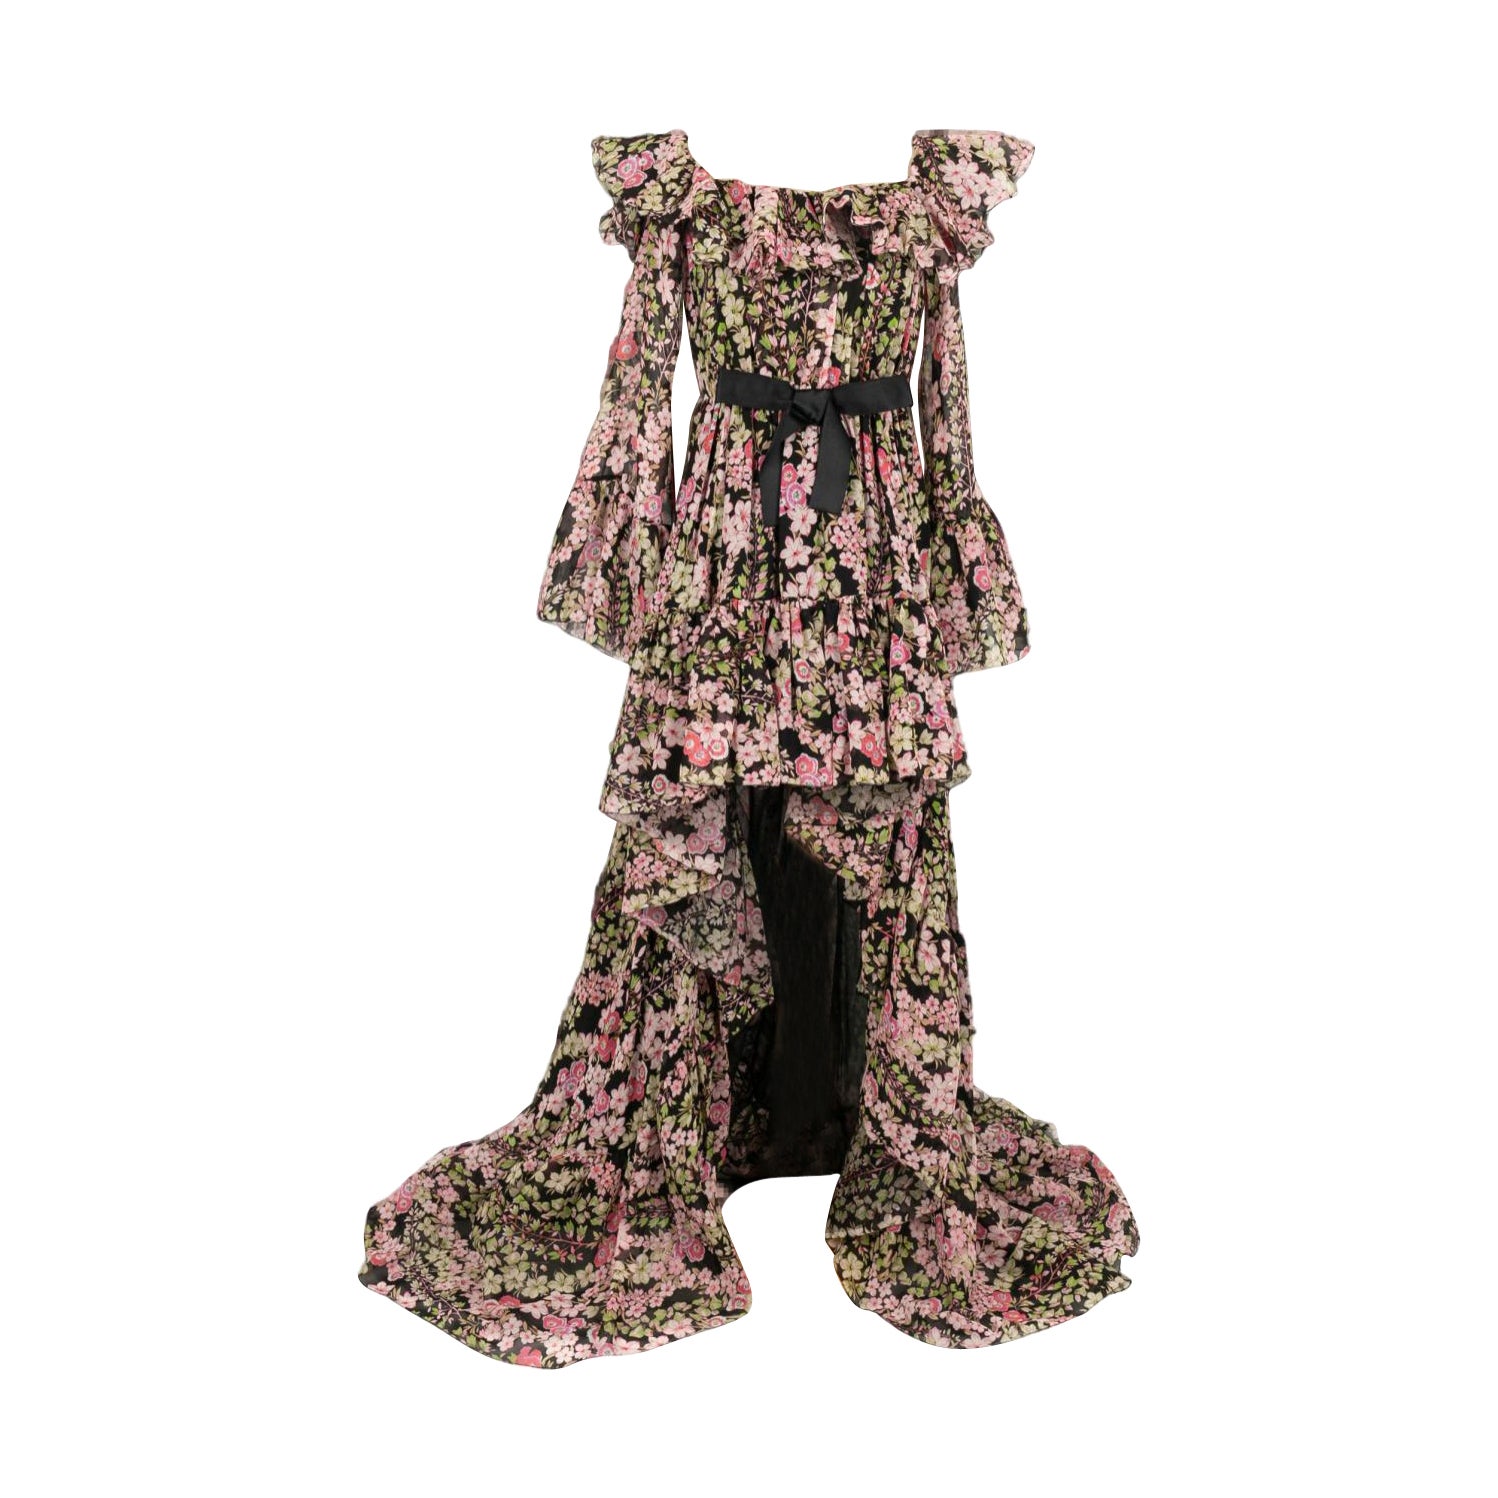 Giambattista Valli Silk Dress in Shades of Pink